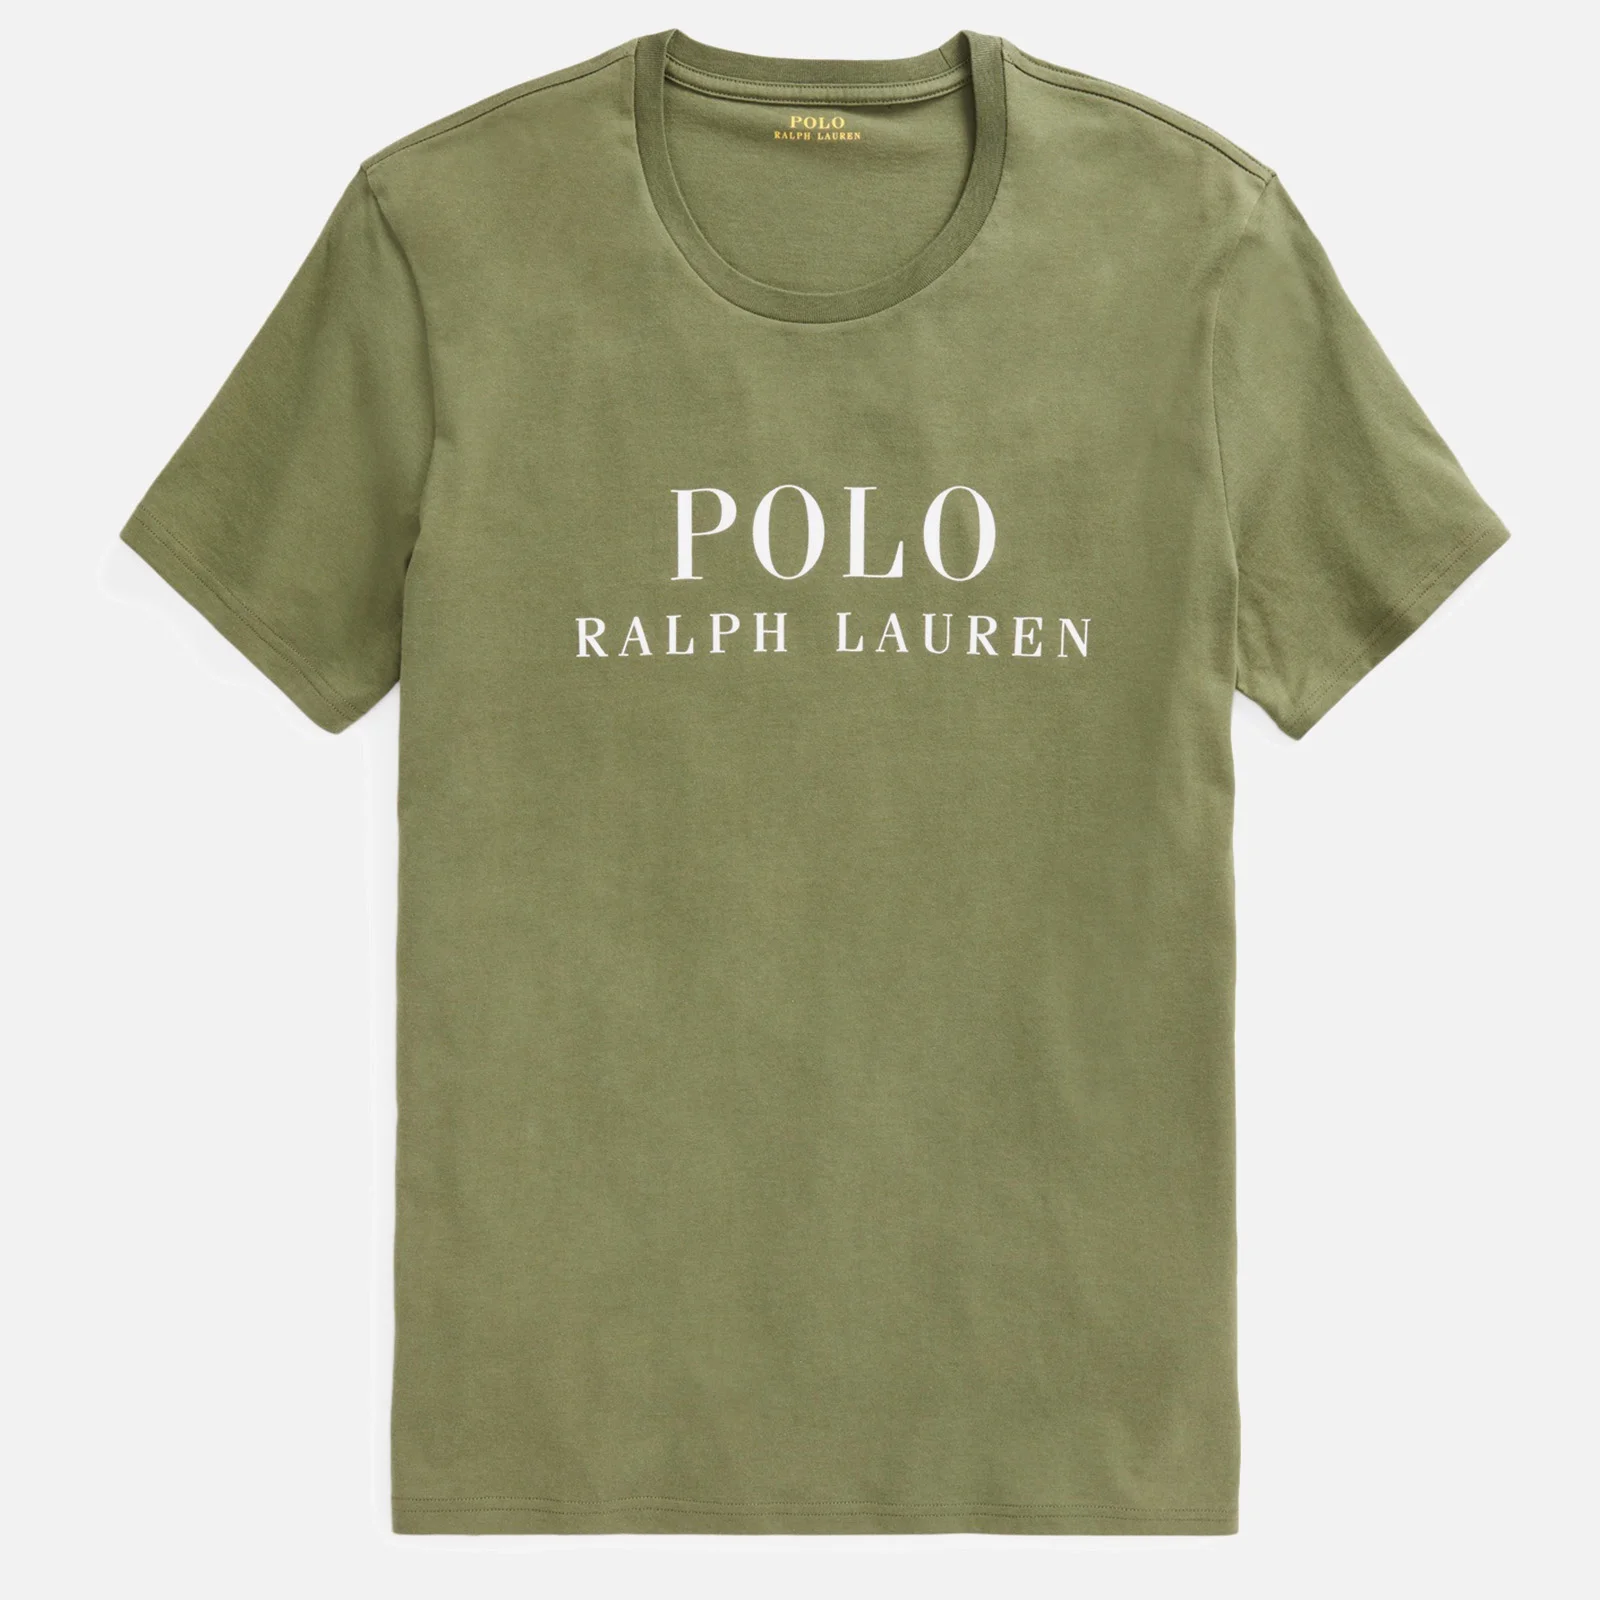 Polo Ralph Lauren Men's Liquid Cotton Large Logo T-Shirt - Supply Olive Image 1